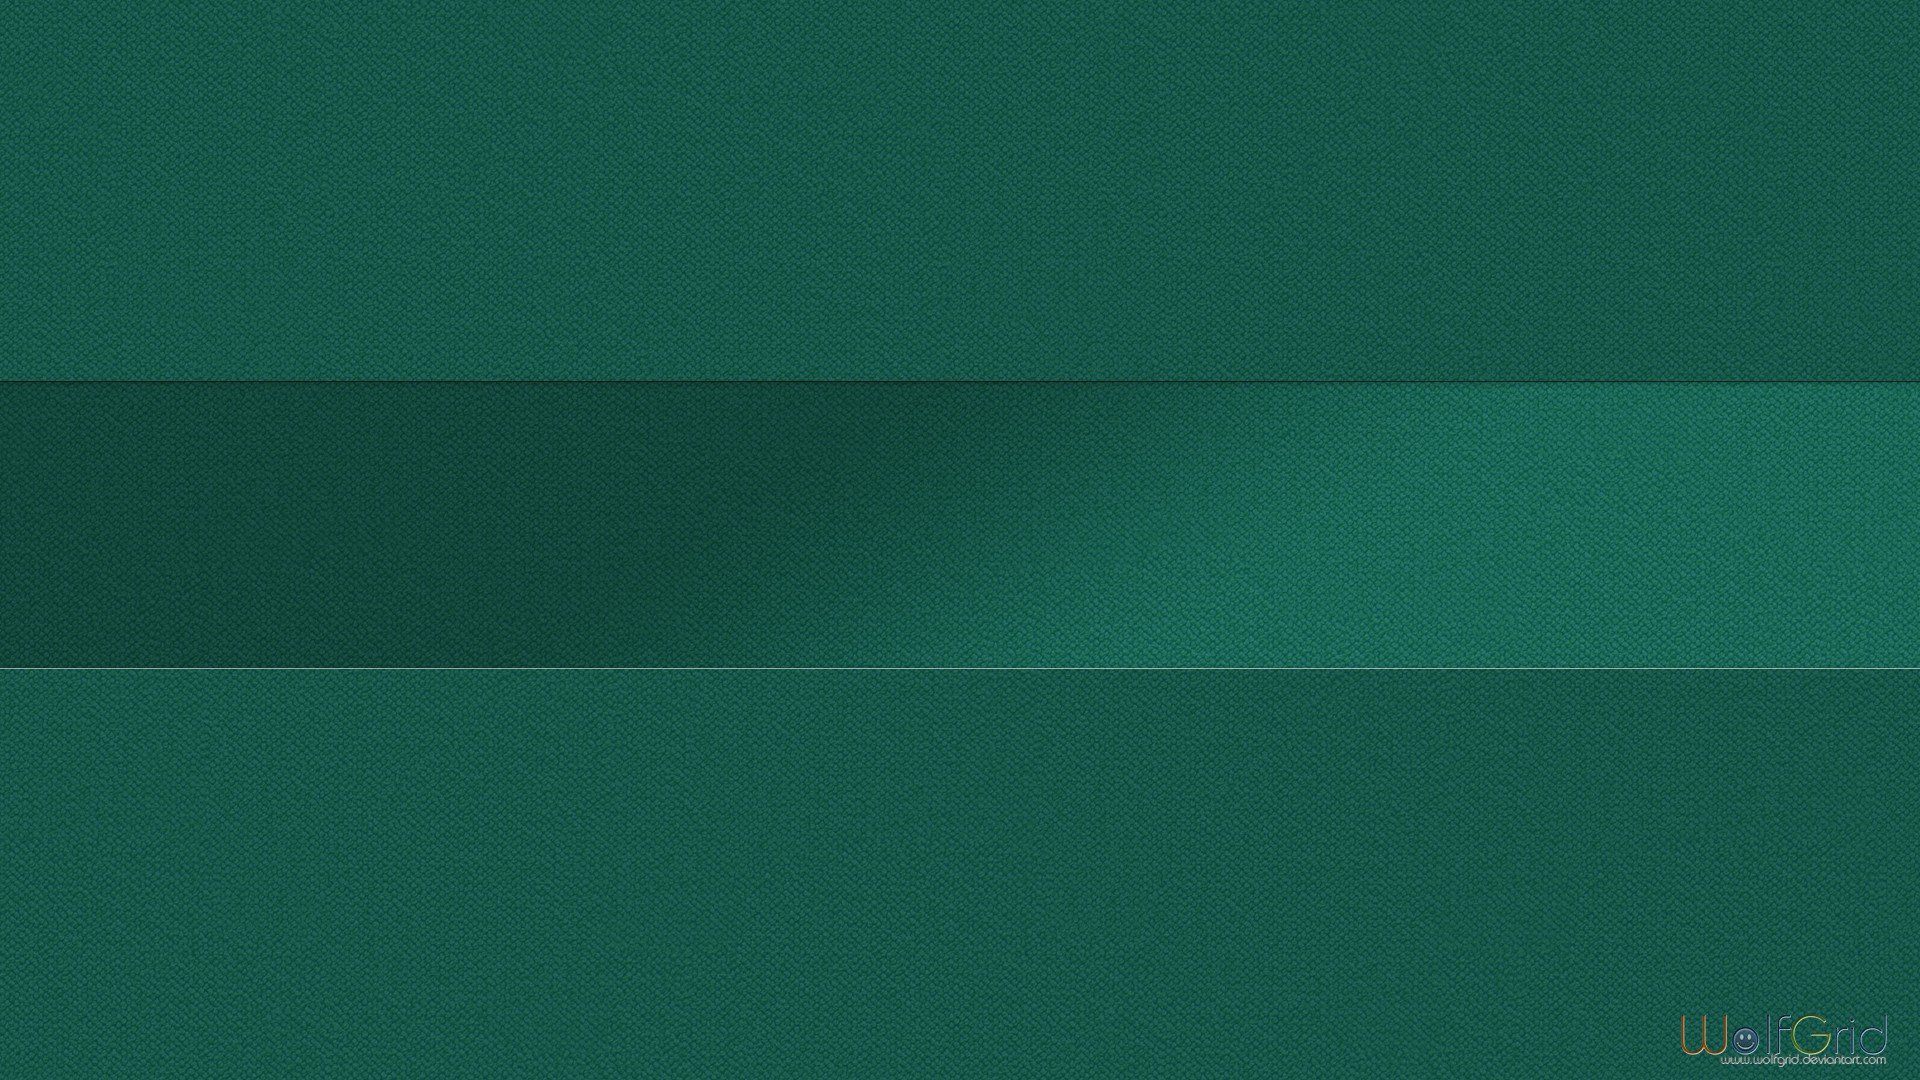 General 1920x1080 minimalism green background texture